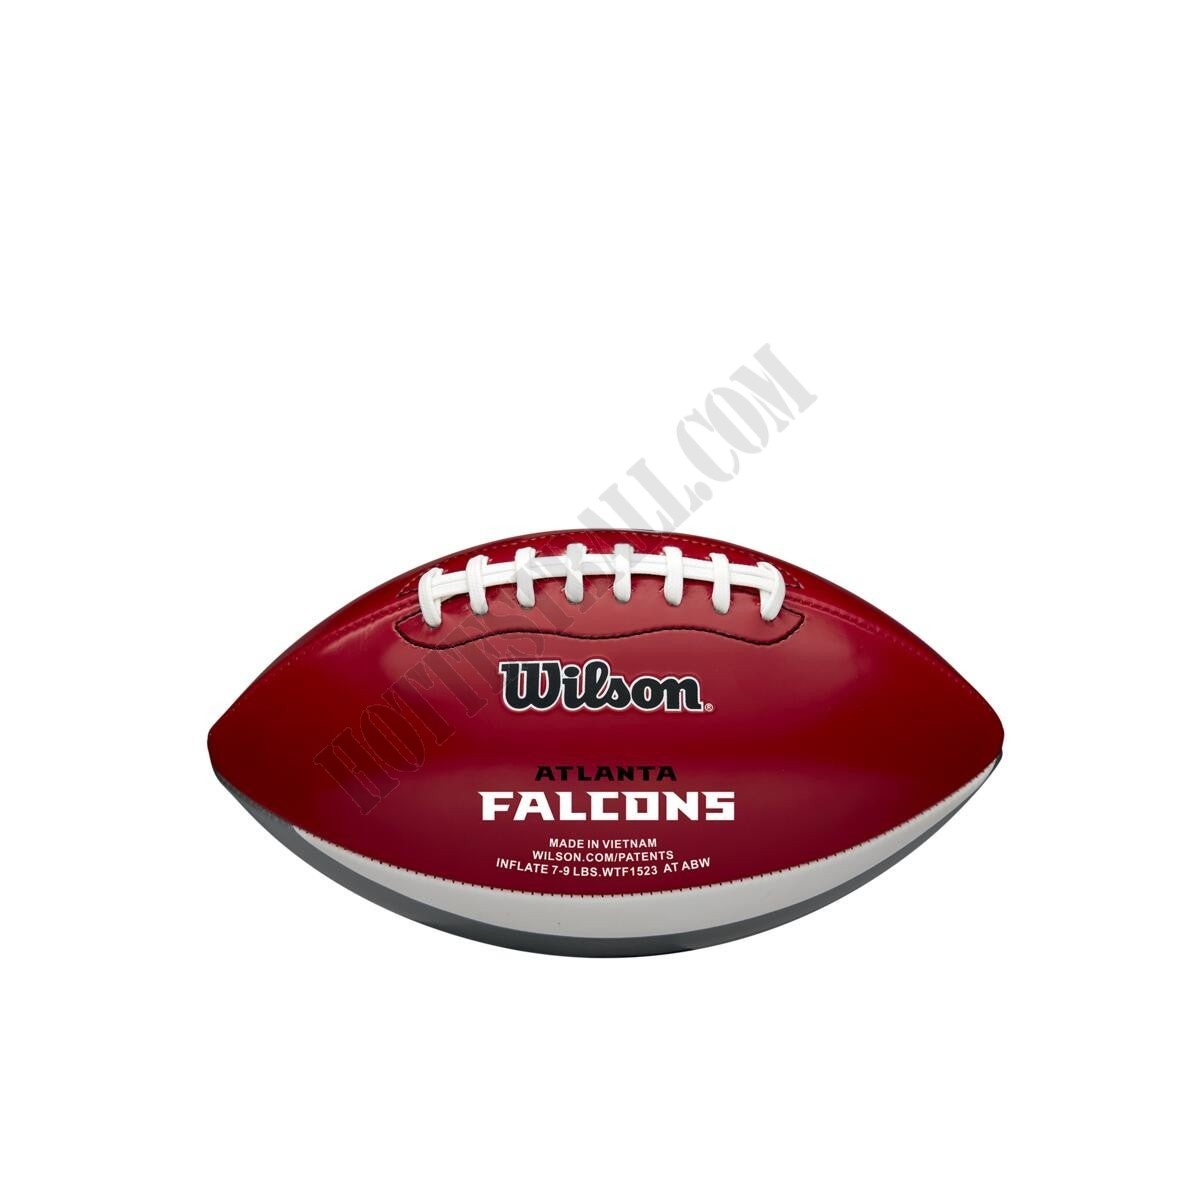 NFL City Pride Football - Atlanta Falcons ● Wilson Promotions - -1